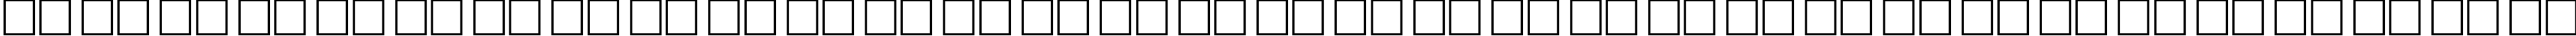 Пример написания русского алфавита шрифтом Rubic